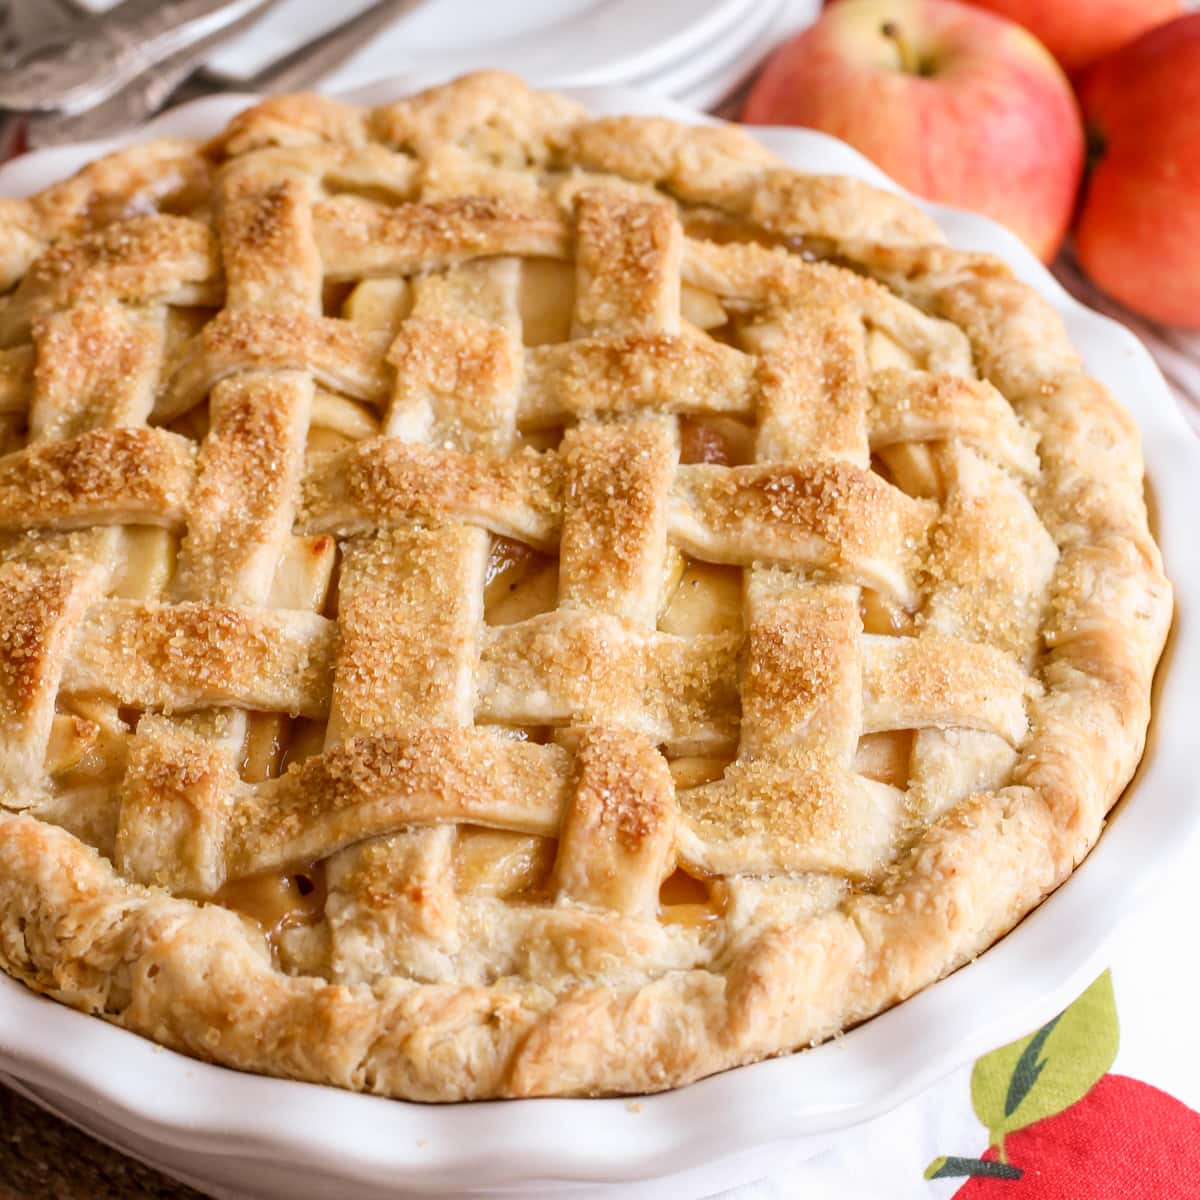 Best Apple Pie recipe close up image.